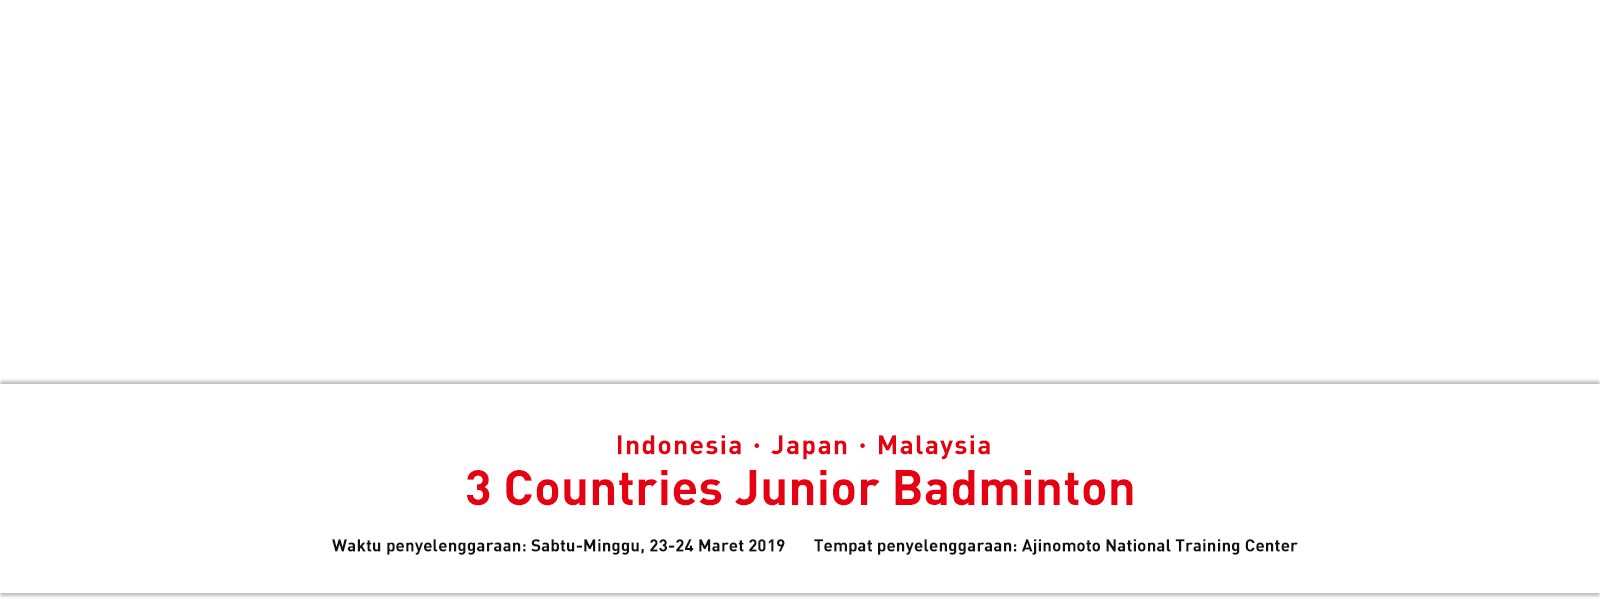 Indonesia・Japan・Malaysia 3 Countries Junior Badminton Waktu penyelenggaraan: Sabtu-Minggu, 23-24 Maret 2019 Tempat penyelenggaraan: Ajinomoto National Training Center